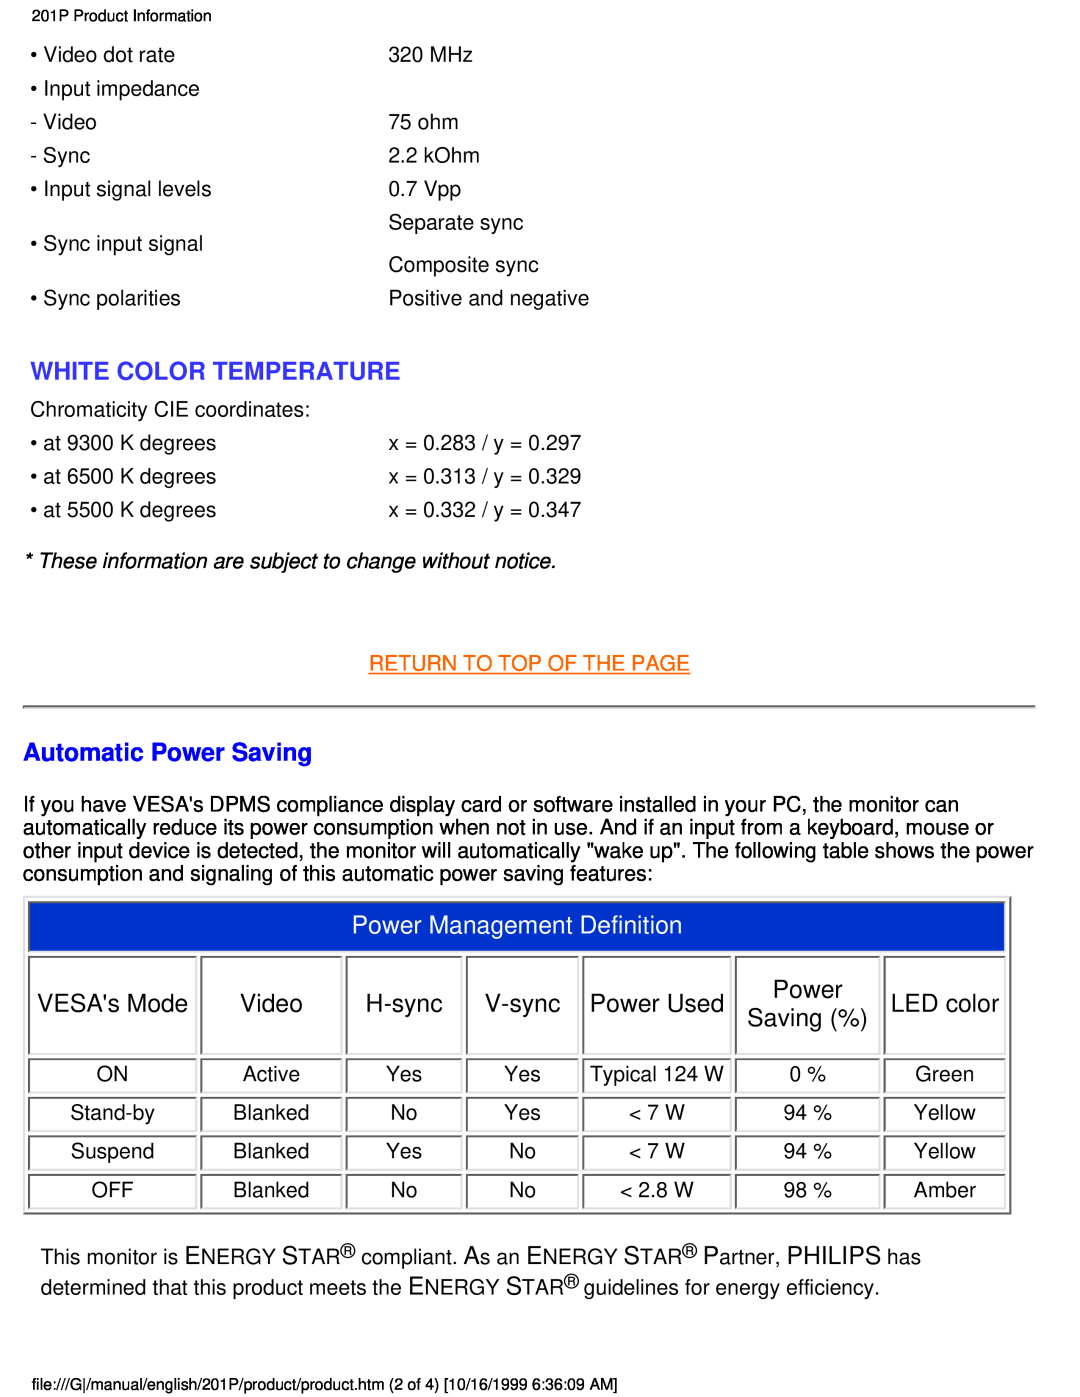 Philips 201P White Color Temperature, Automatic Power Saving, Power Management Definition, VESAs Mode, Video, V-sync 